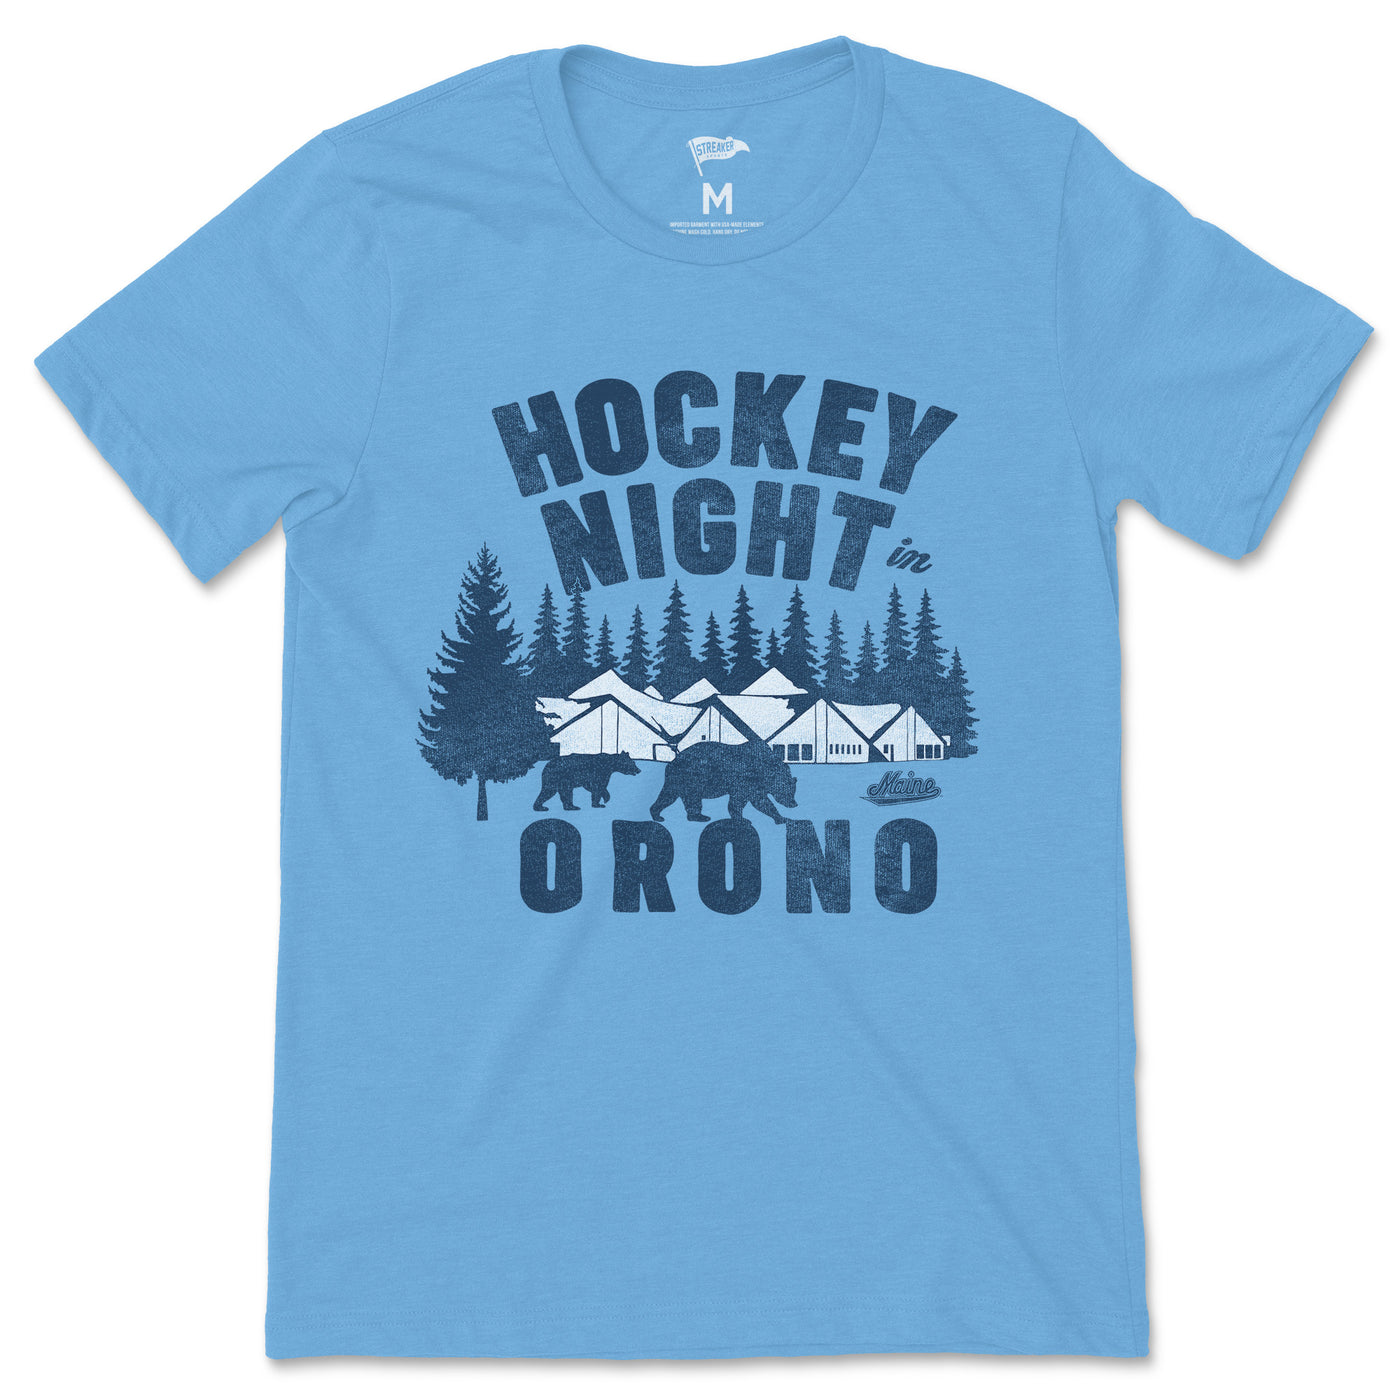 Maine Hockey Night in Orono Tee - Streaker Sports